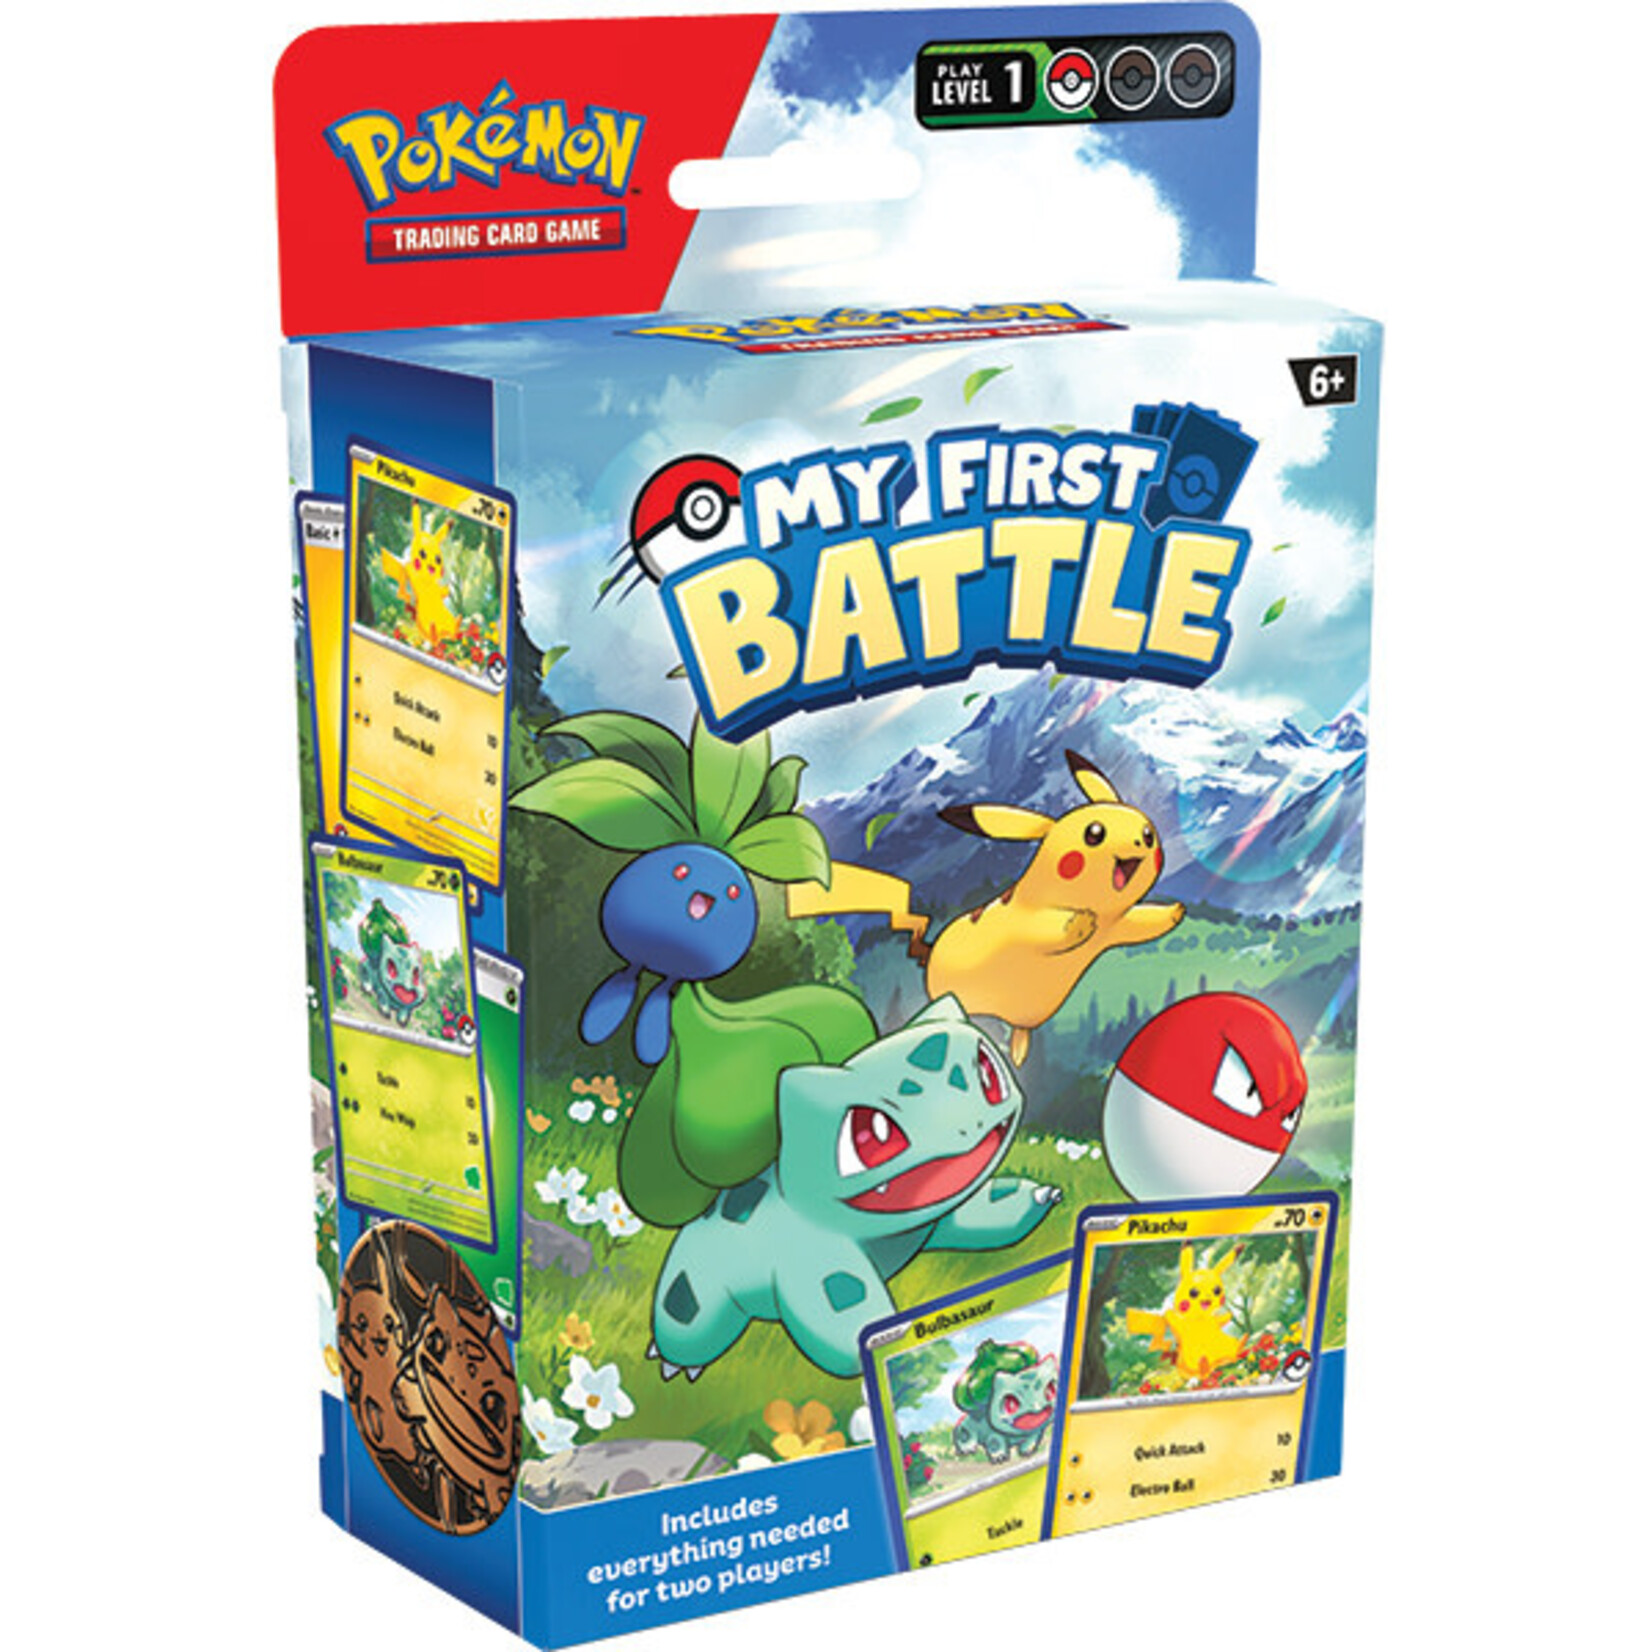 Pokémon Pokémon Trading Card Game: My First Battle Box (Bulbasaur and Pikachu)